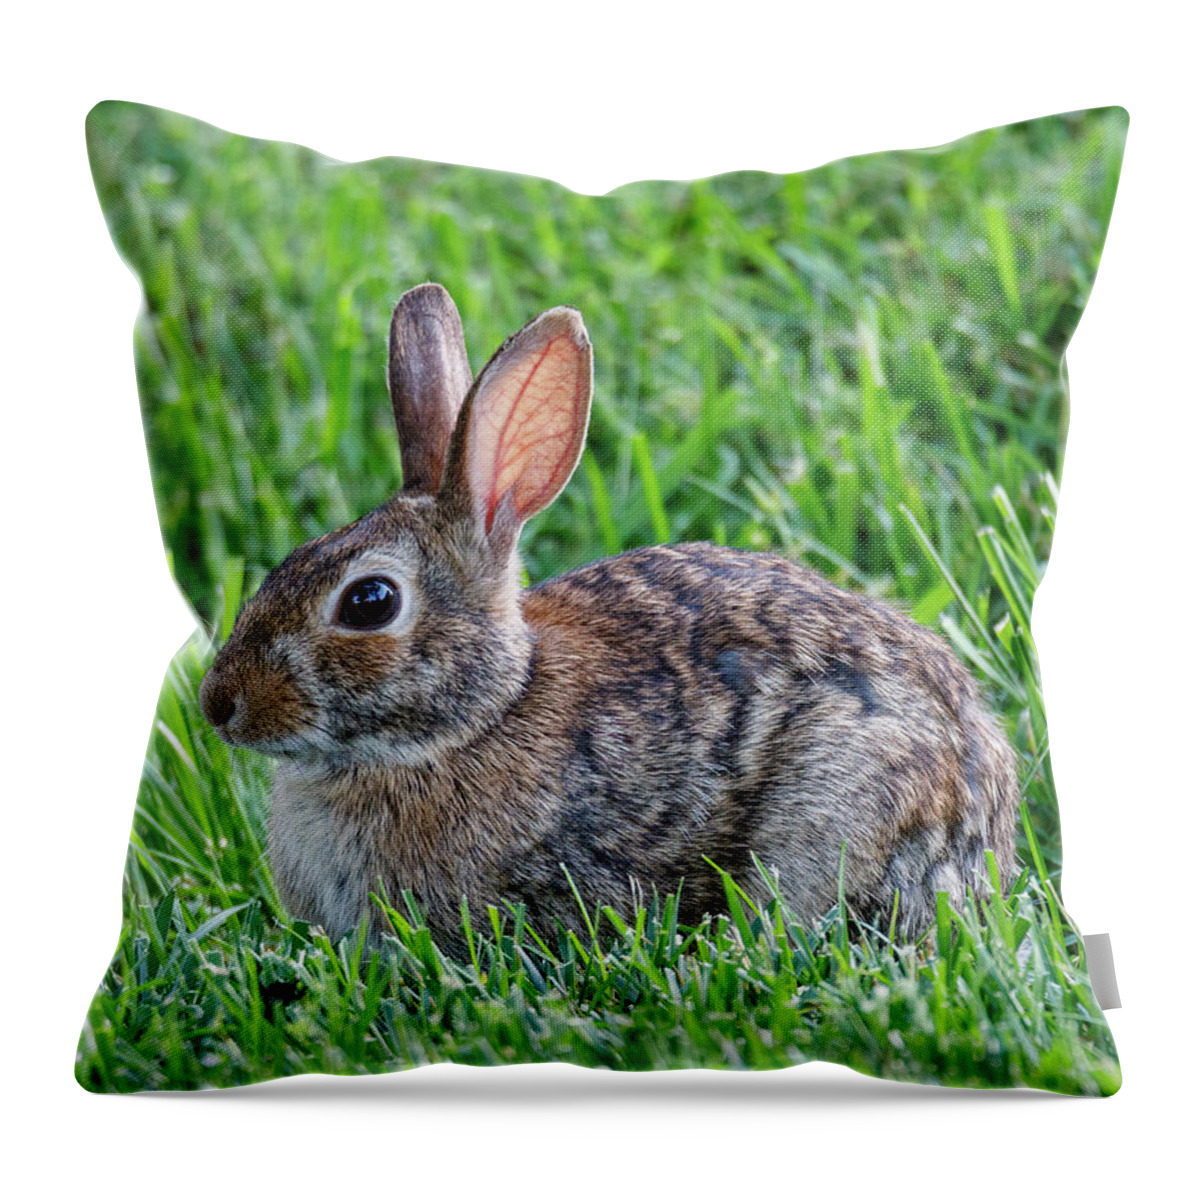 Rabbit Throw Pillow featuring the photograph Backyard Bunny by David Beechum